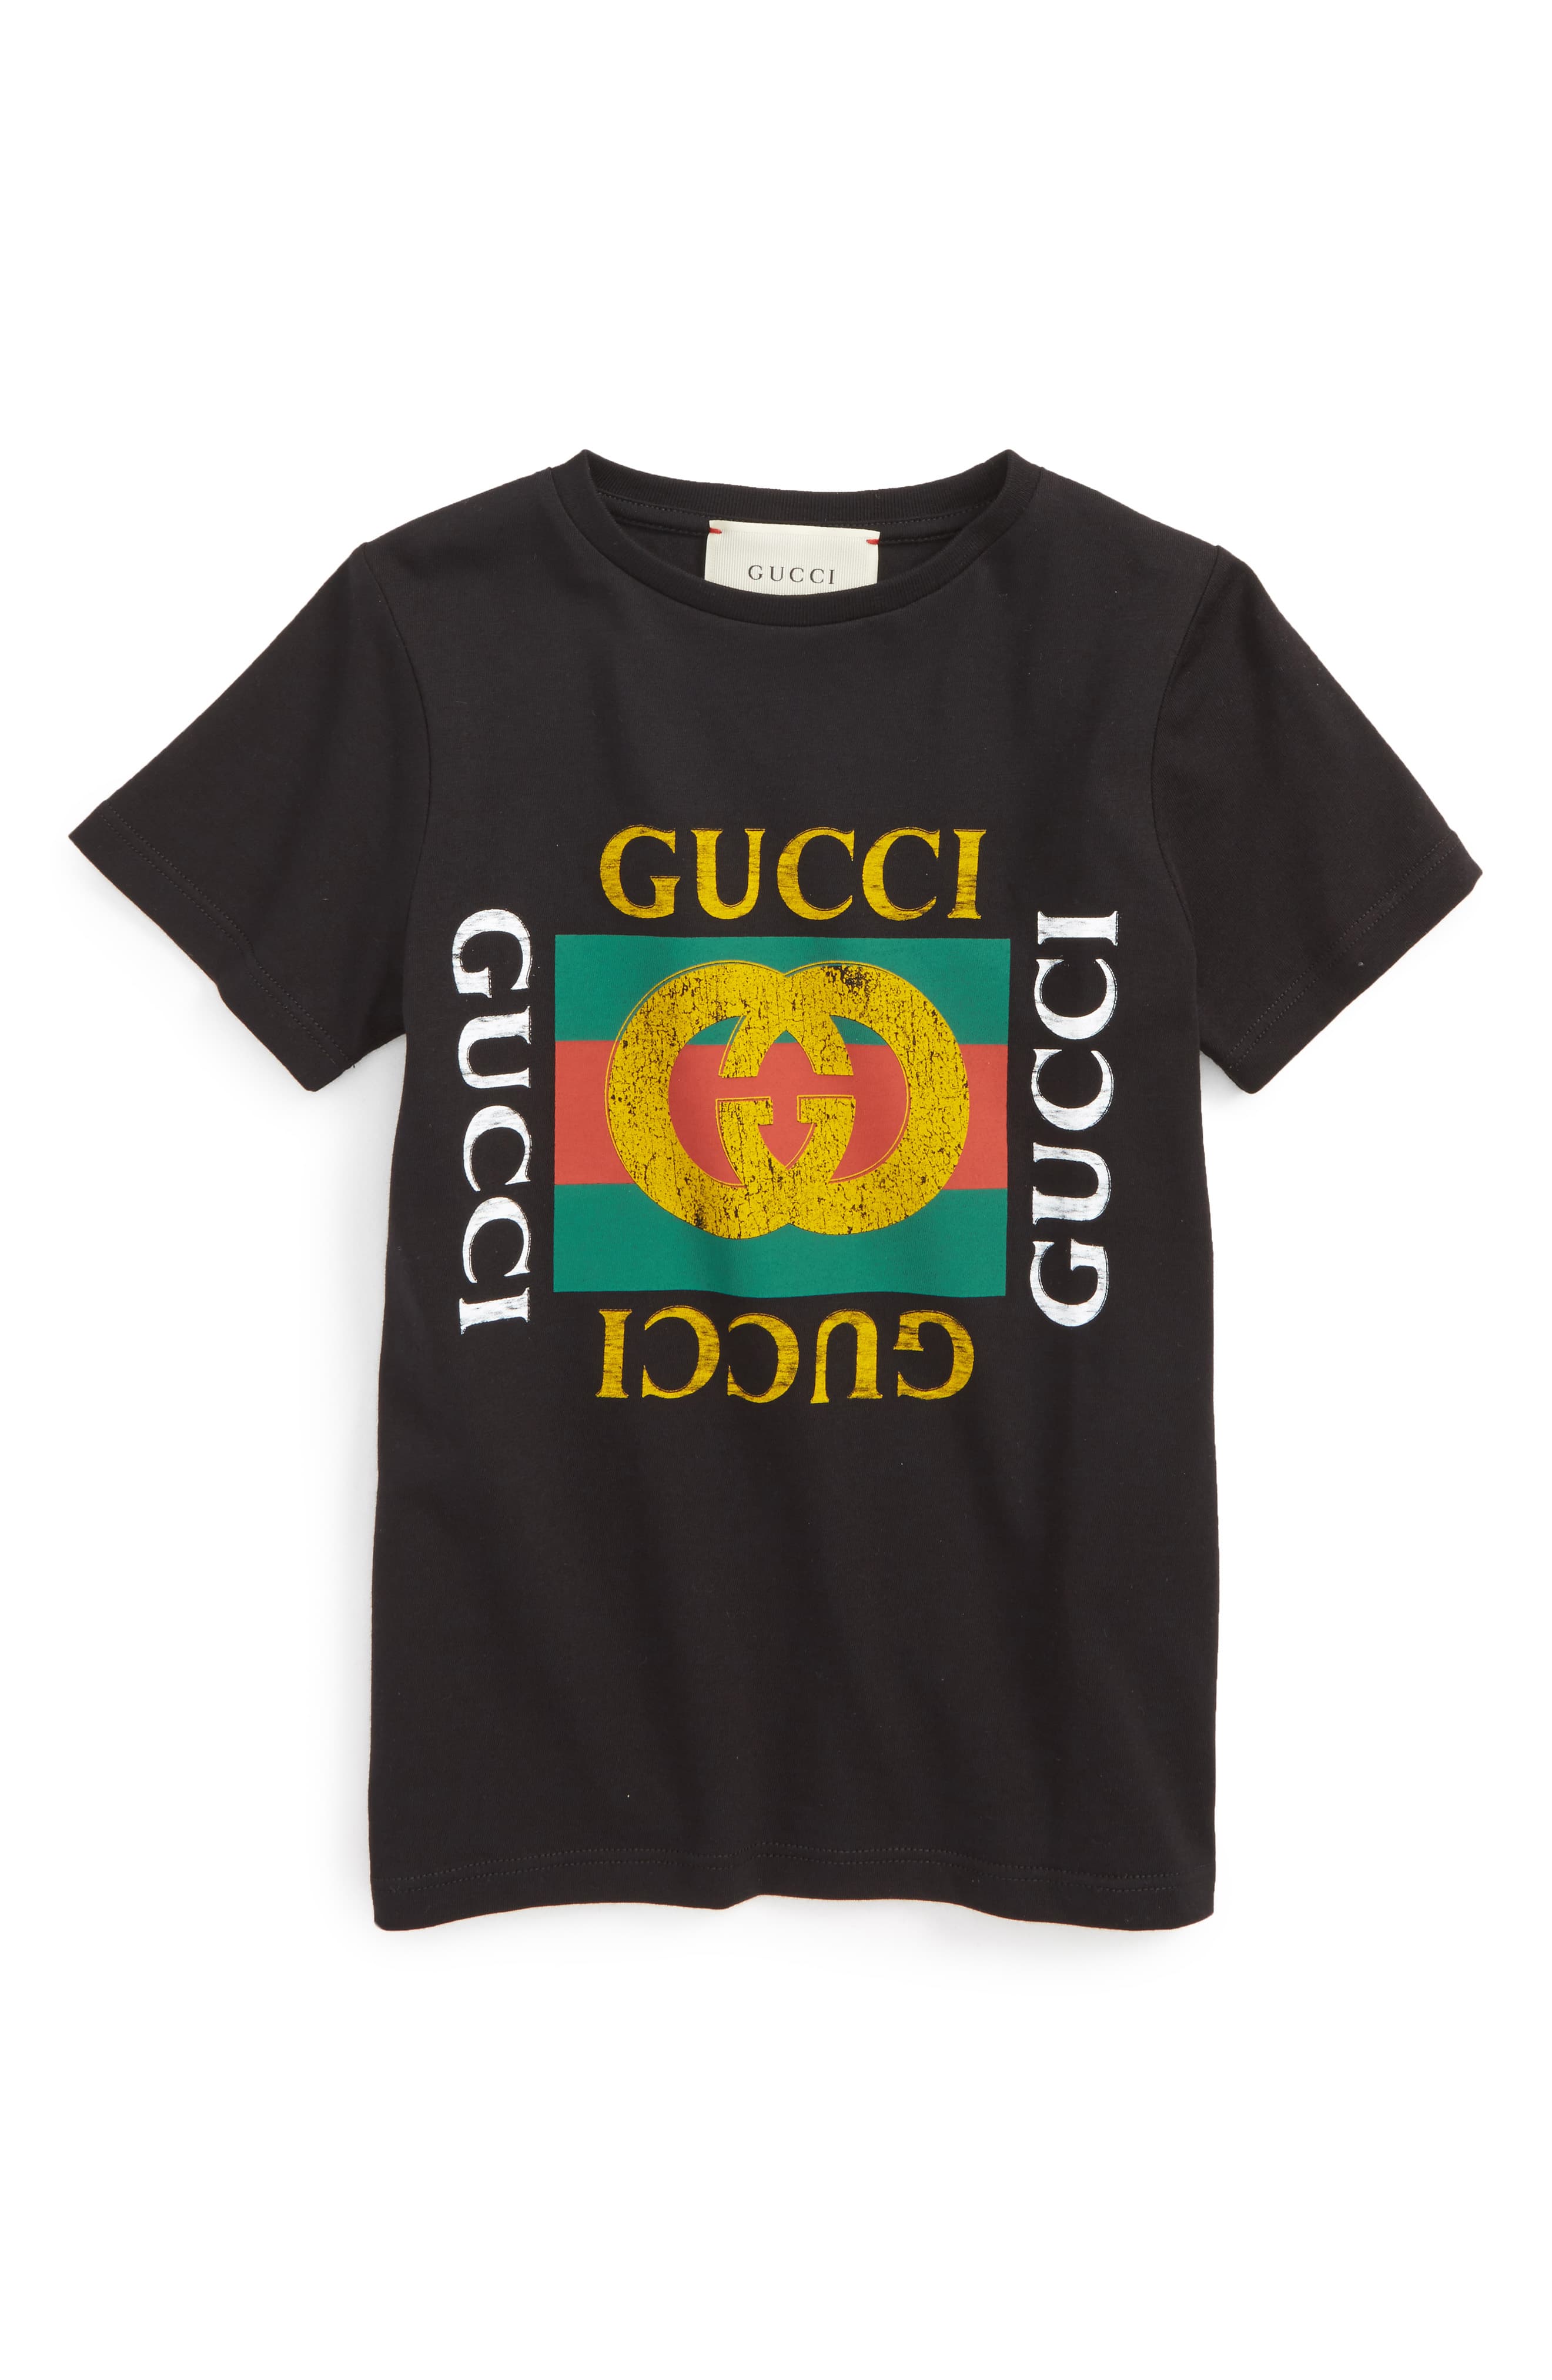 Boy’s Gucci Logo Graphic T-Shirt, Size 4Y – Black | The Fashionisto